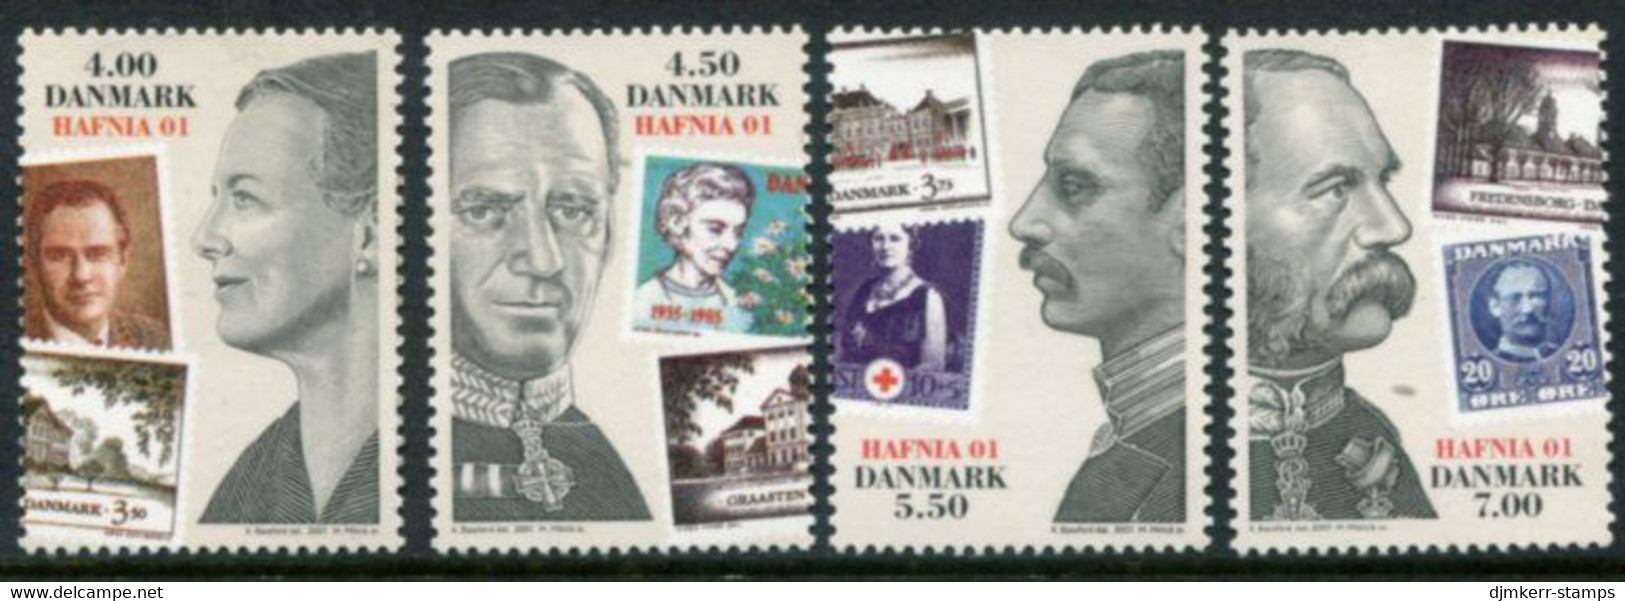 DENMARK 2001 HAFNIA'01 Stamp Exhibition MNH / **.. Michel 1287-90 - Ongebruikt